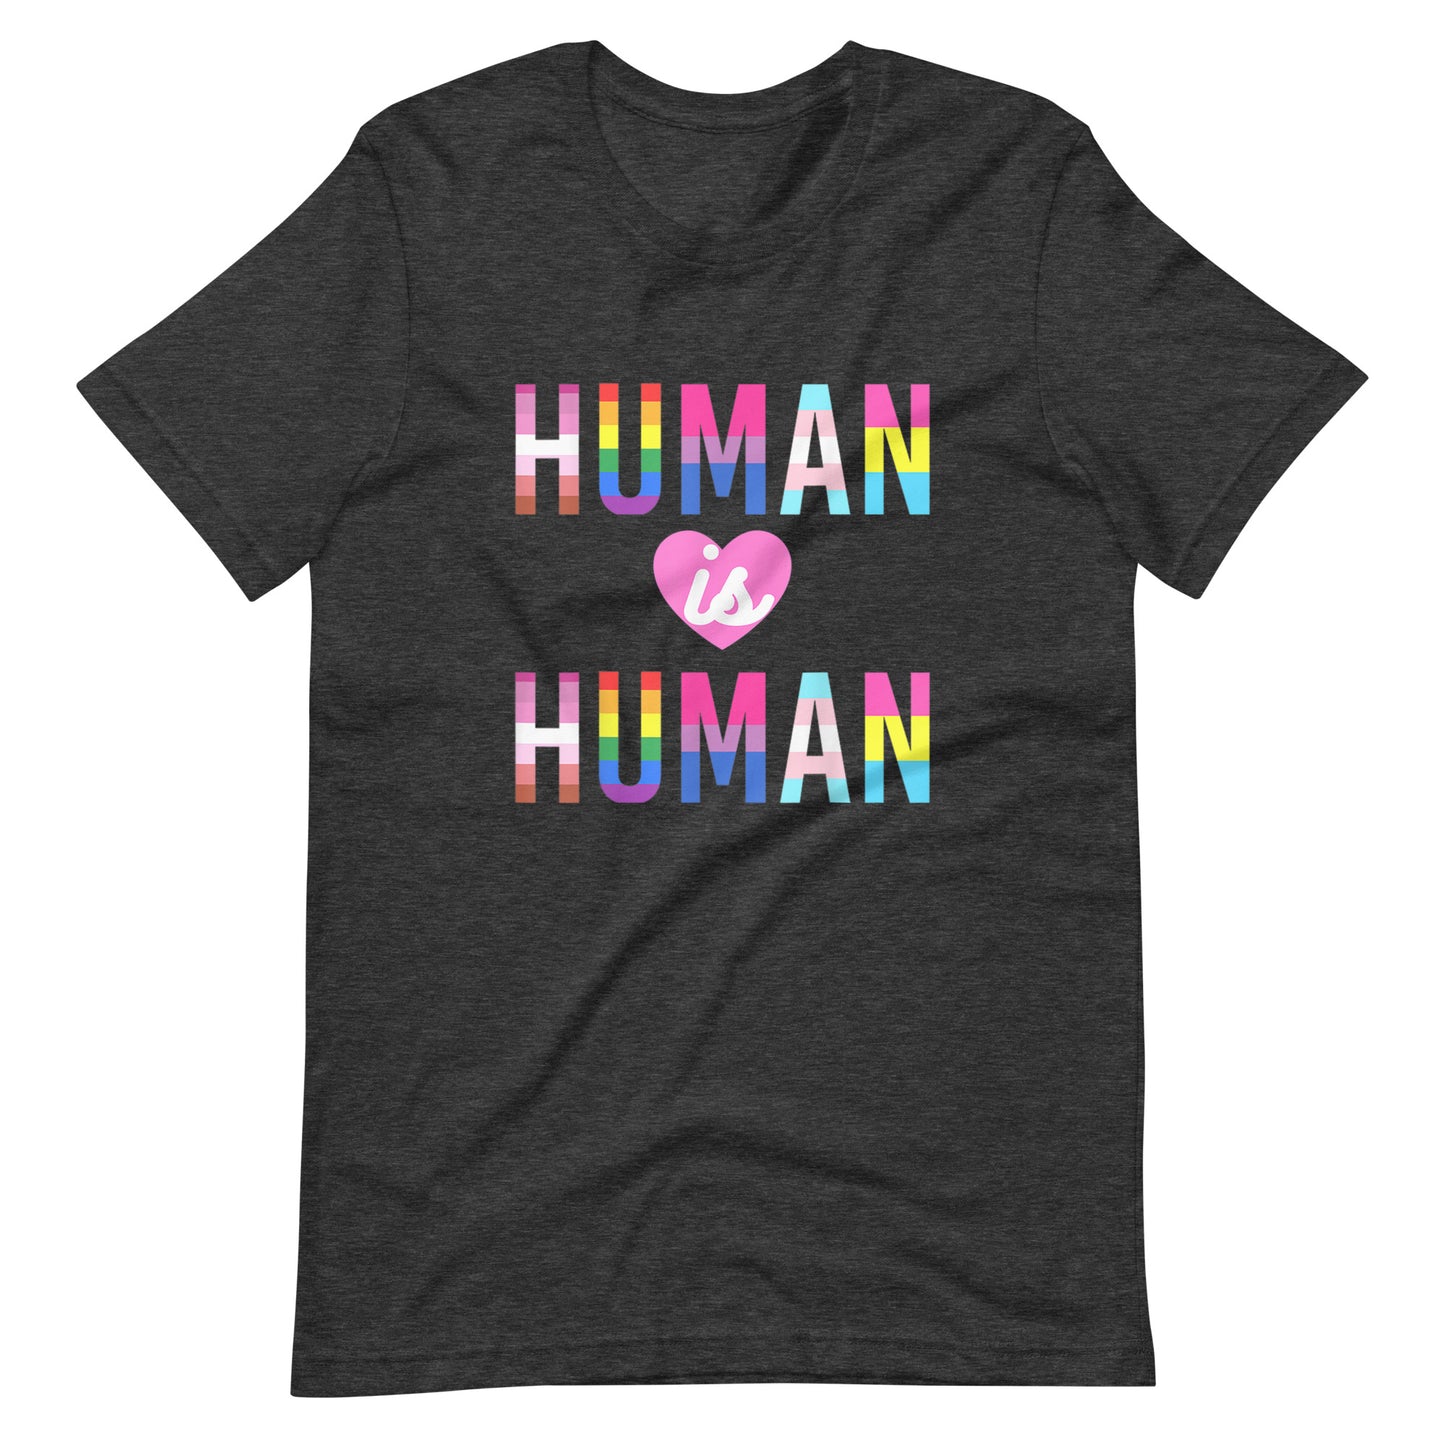 Human is Human Unisex T-Shirt - gay pride apparel